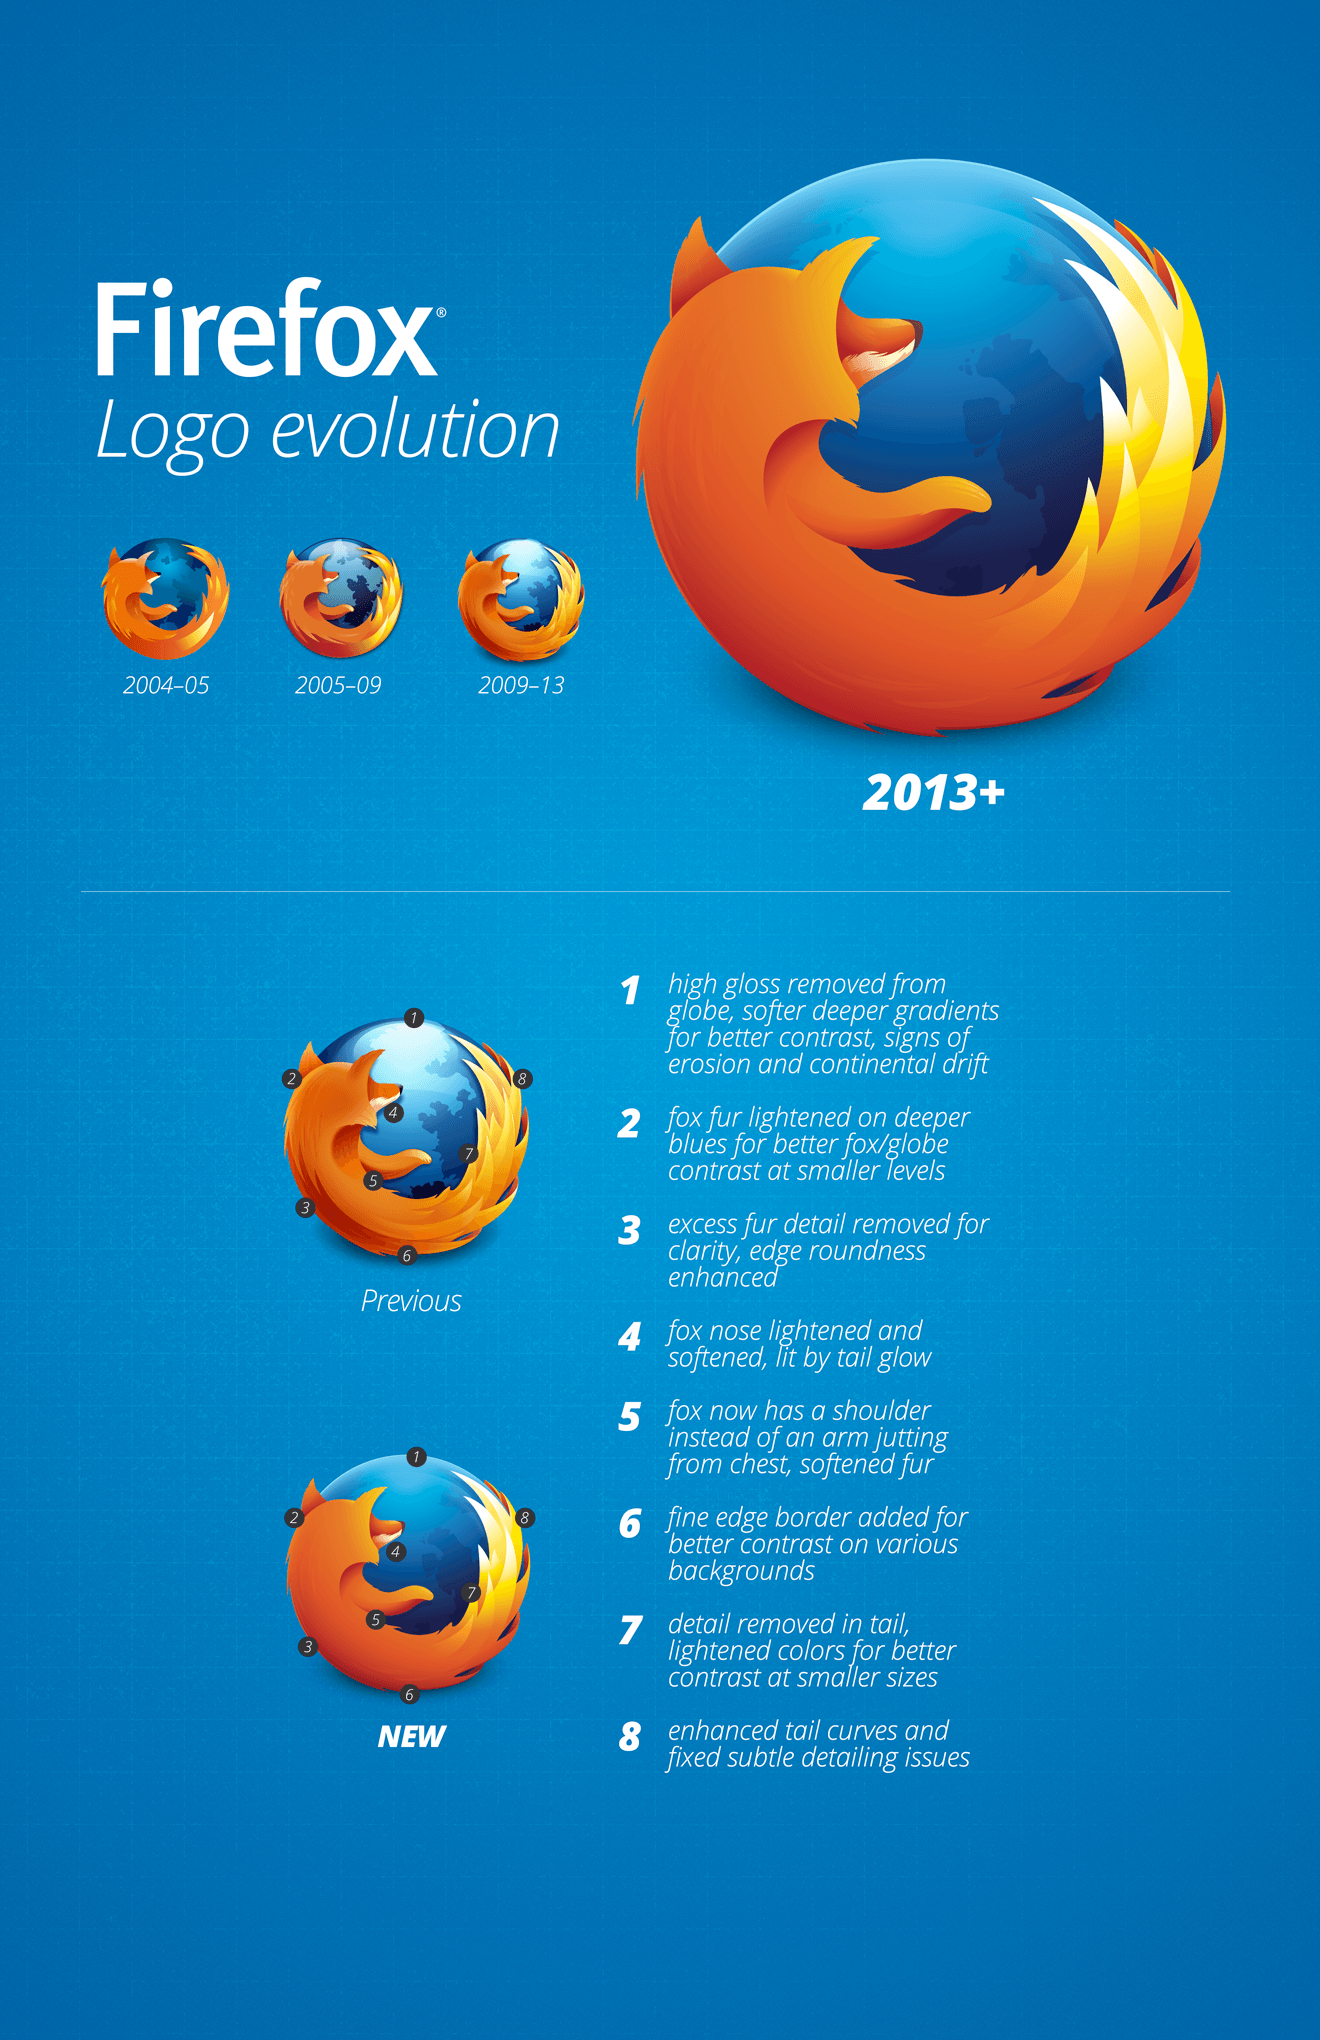 Firefox Logo - A New Firefox Logo for a New Firefox Era | about:pixels